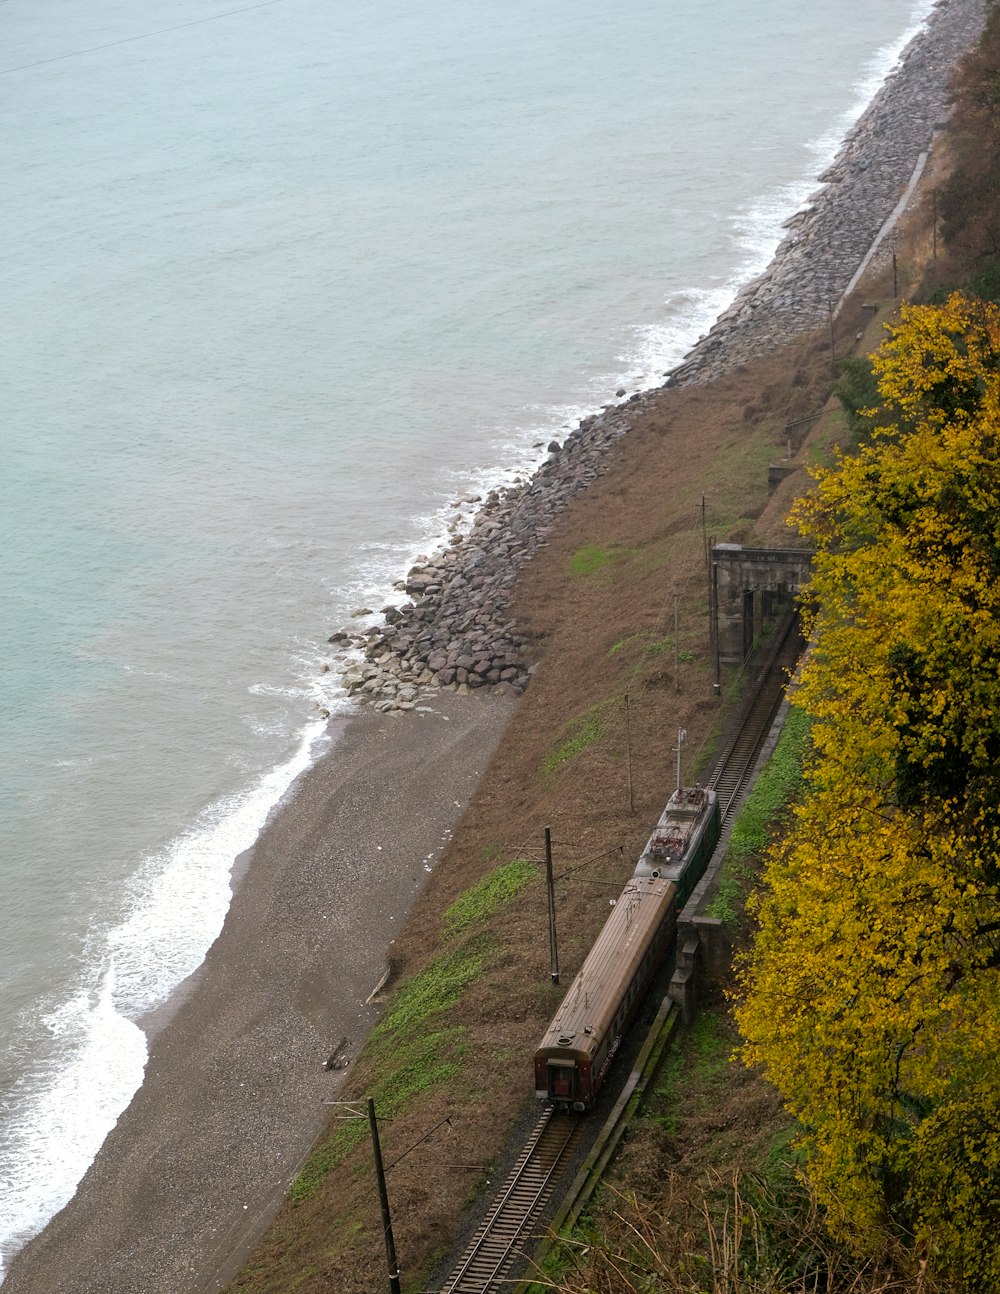 a train traveling down tracks next to a beach